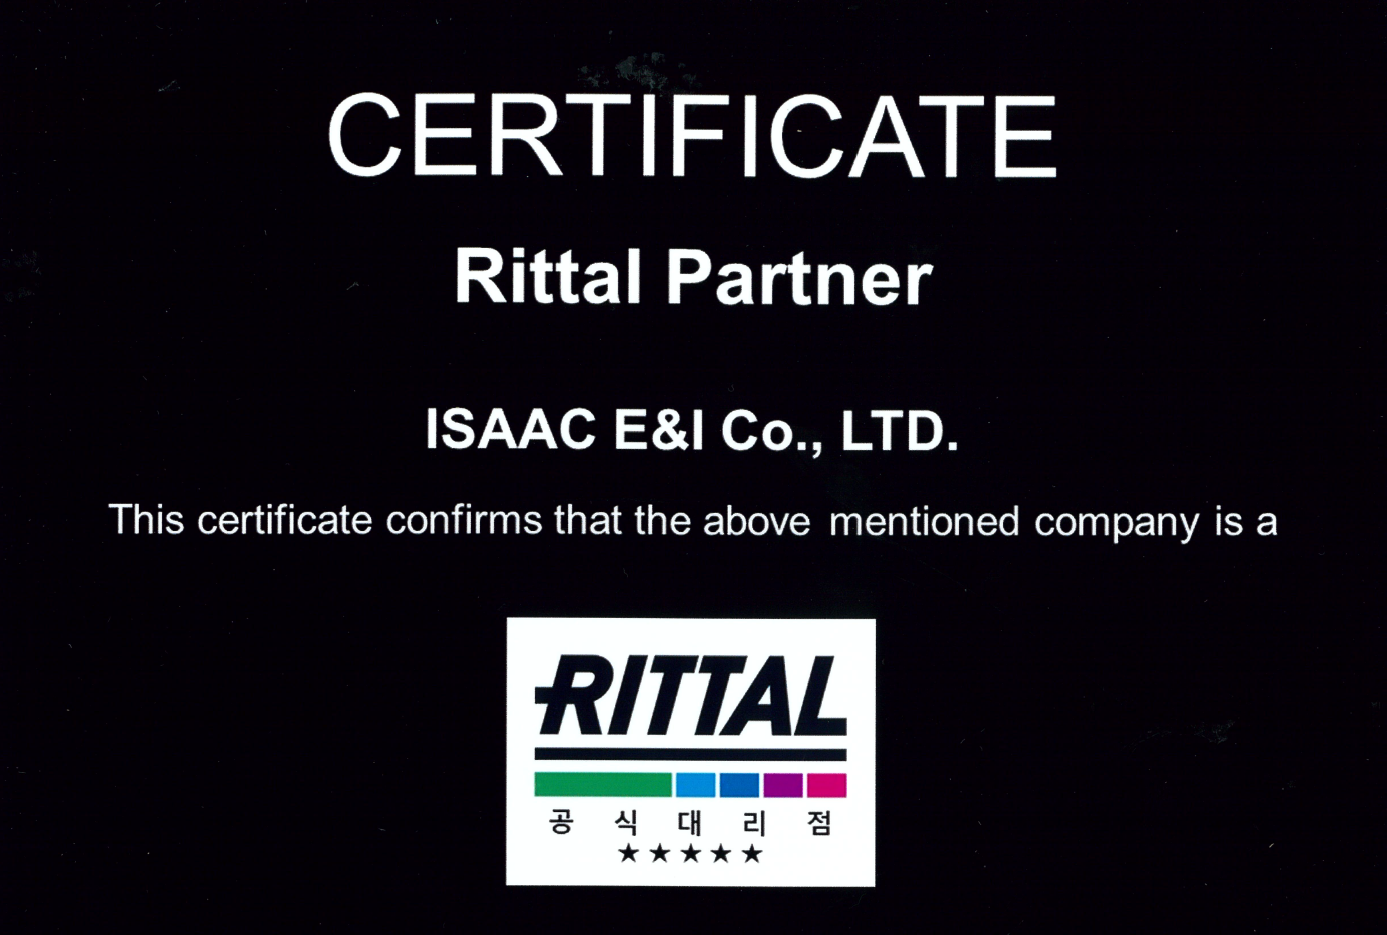 ISAAC E&I Rittal Korea 공식 공급사 계약 체결